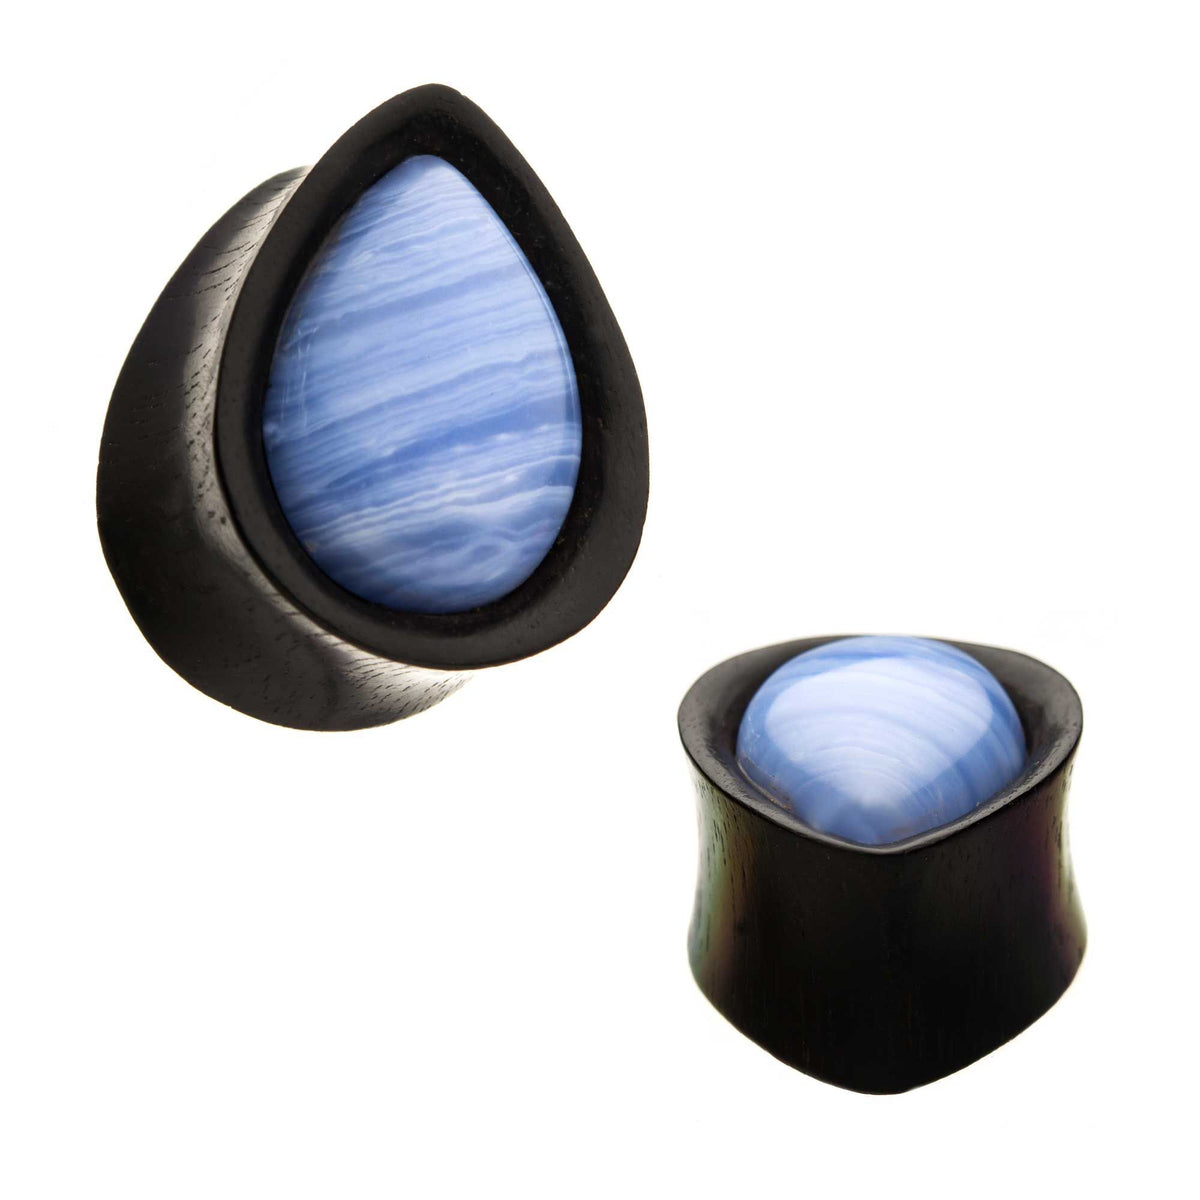 Arang Wood w/ Blue Lace Agate Stone Teardrop Plugs - 1 Pair sbvwpltb